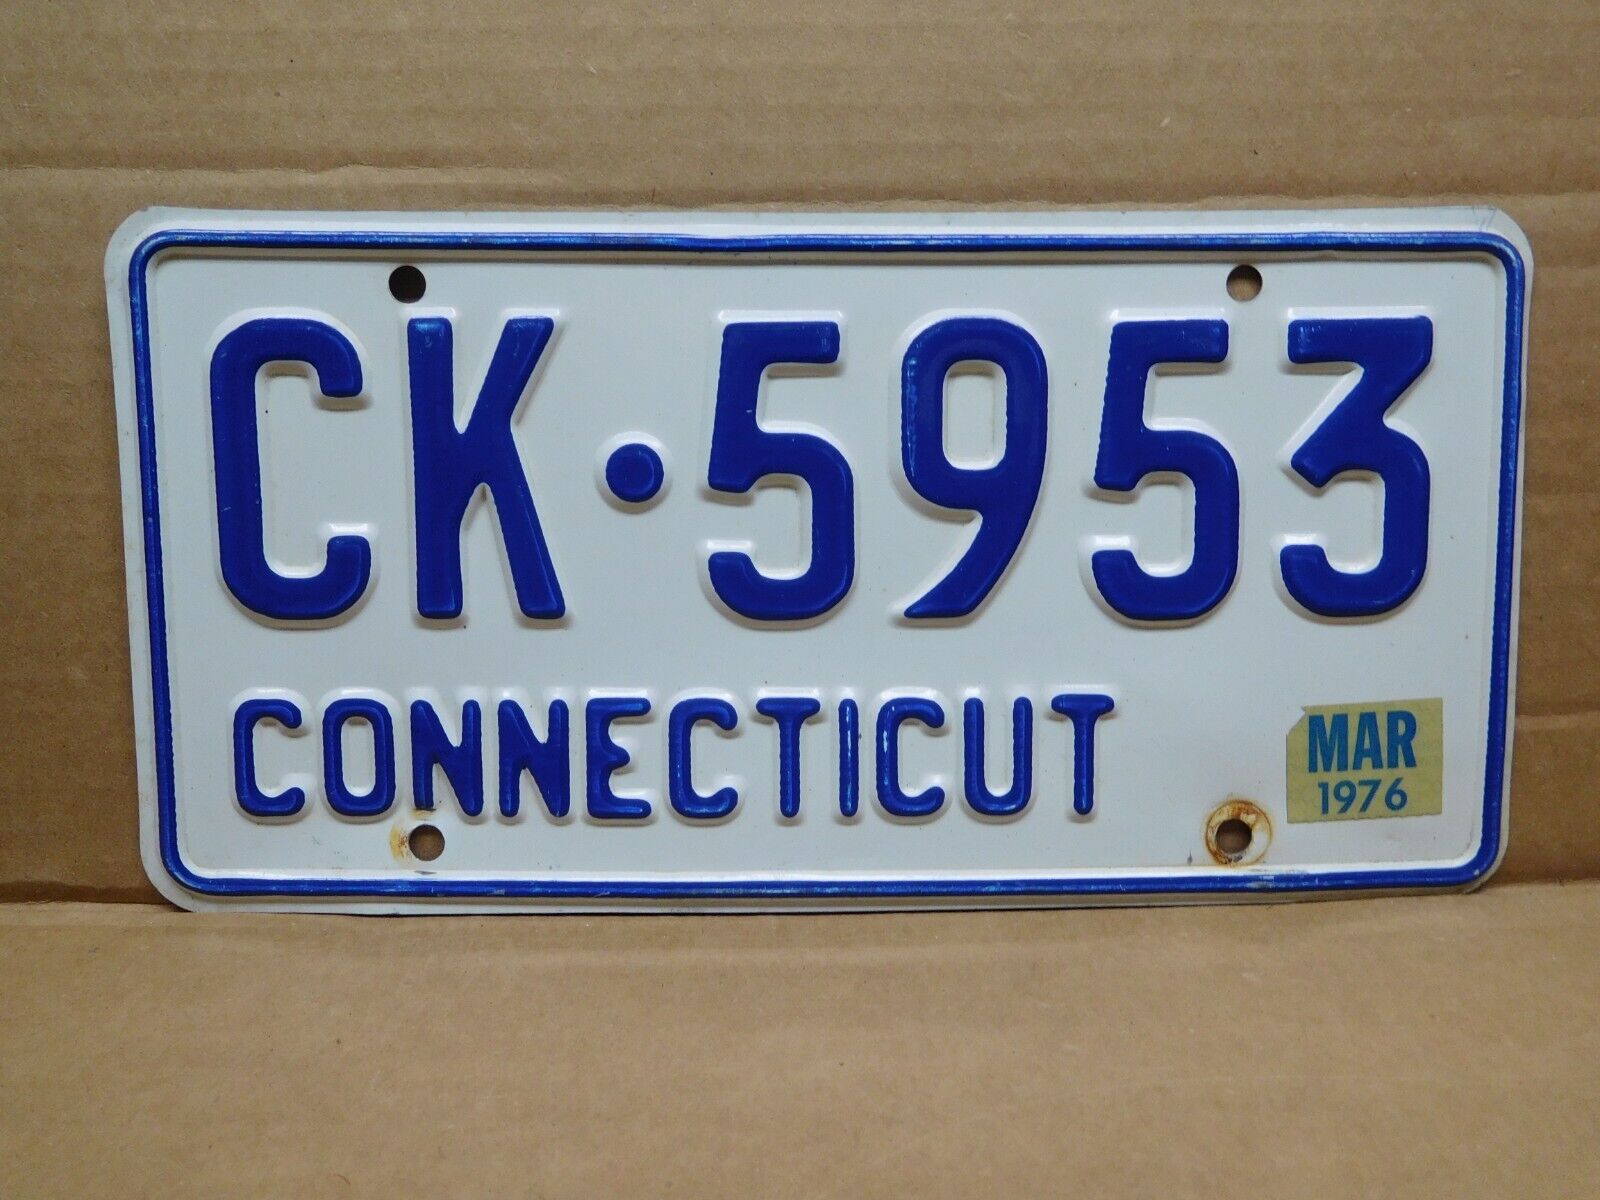 (1) 1976 Connecticut License Plate CK 5953